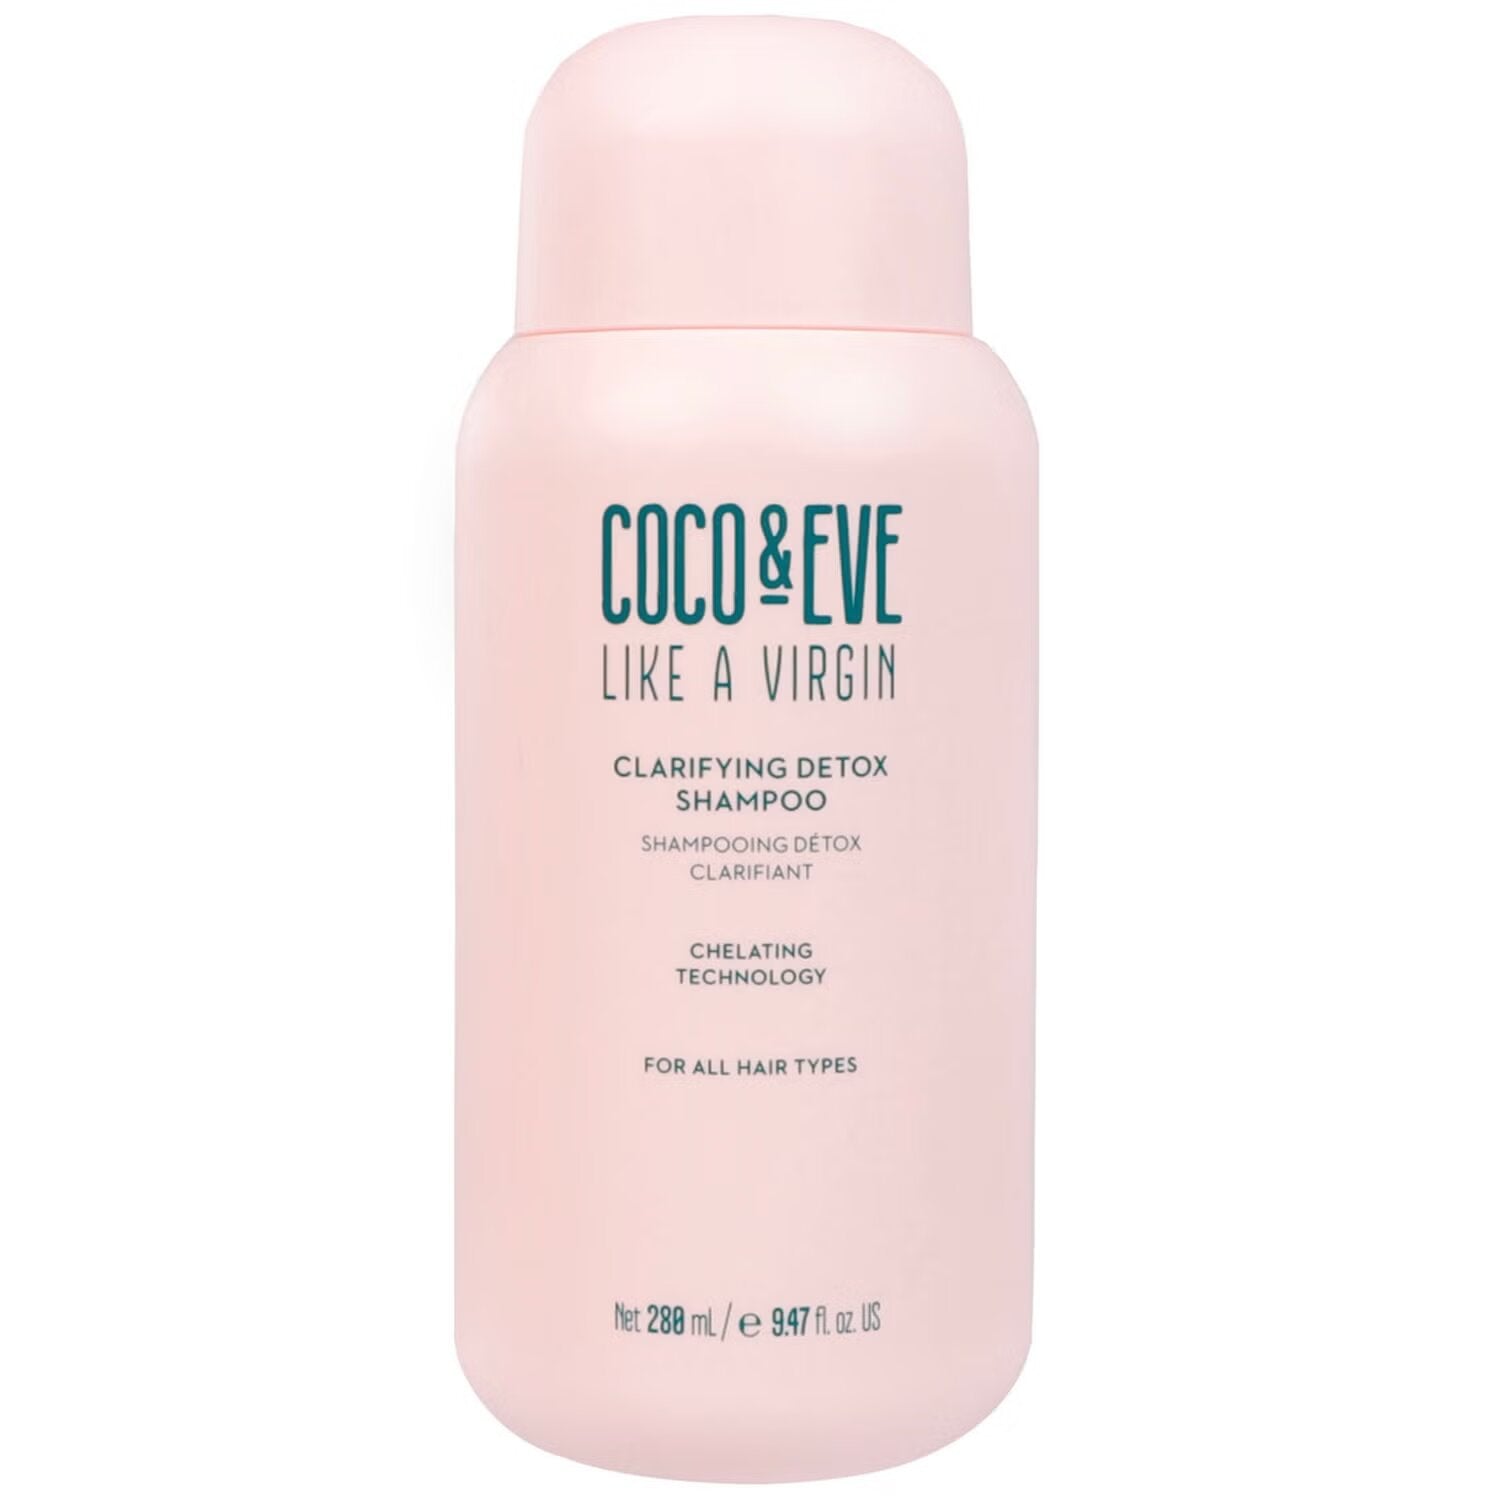 Coco & Eve Clarifying Detox Shampoo - 280ml